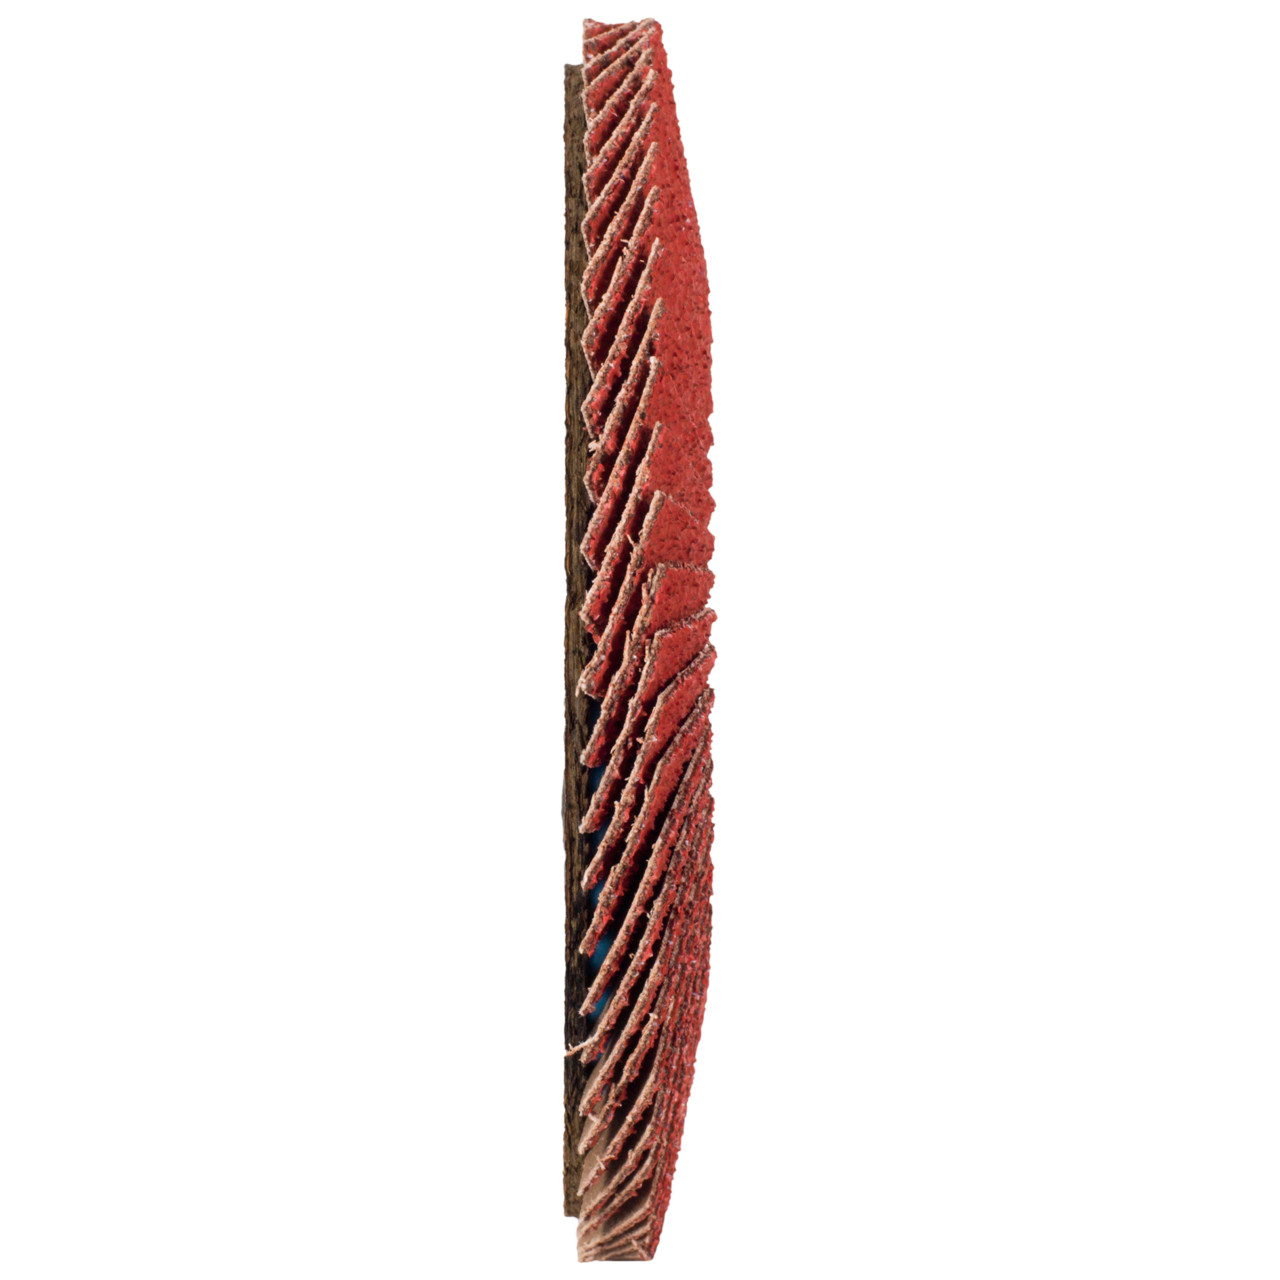 Tyrolit Gekartelde borgring DxH 125x22,23 CERABOND gekartelde borgring voor roestvrij staal, P80, vorm: 27A - geslingerde versie (glasvezeldragerhuisversie), Art. 34165681